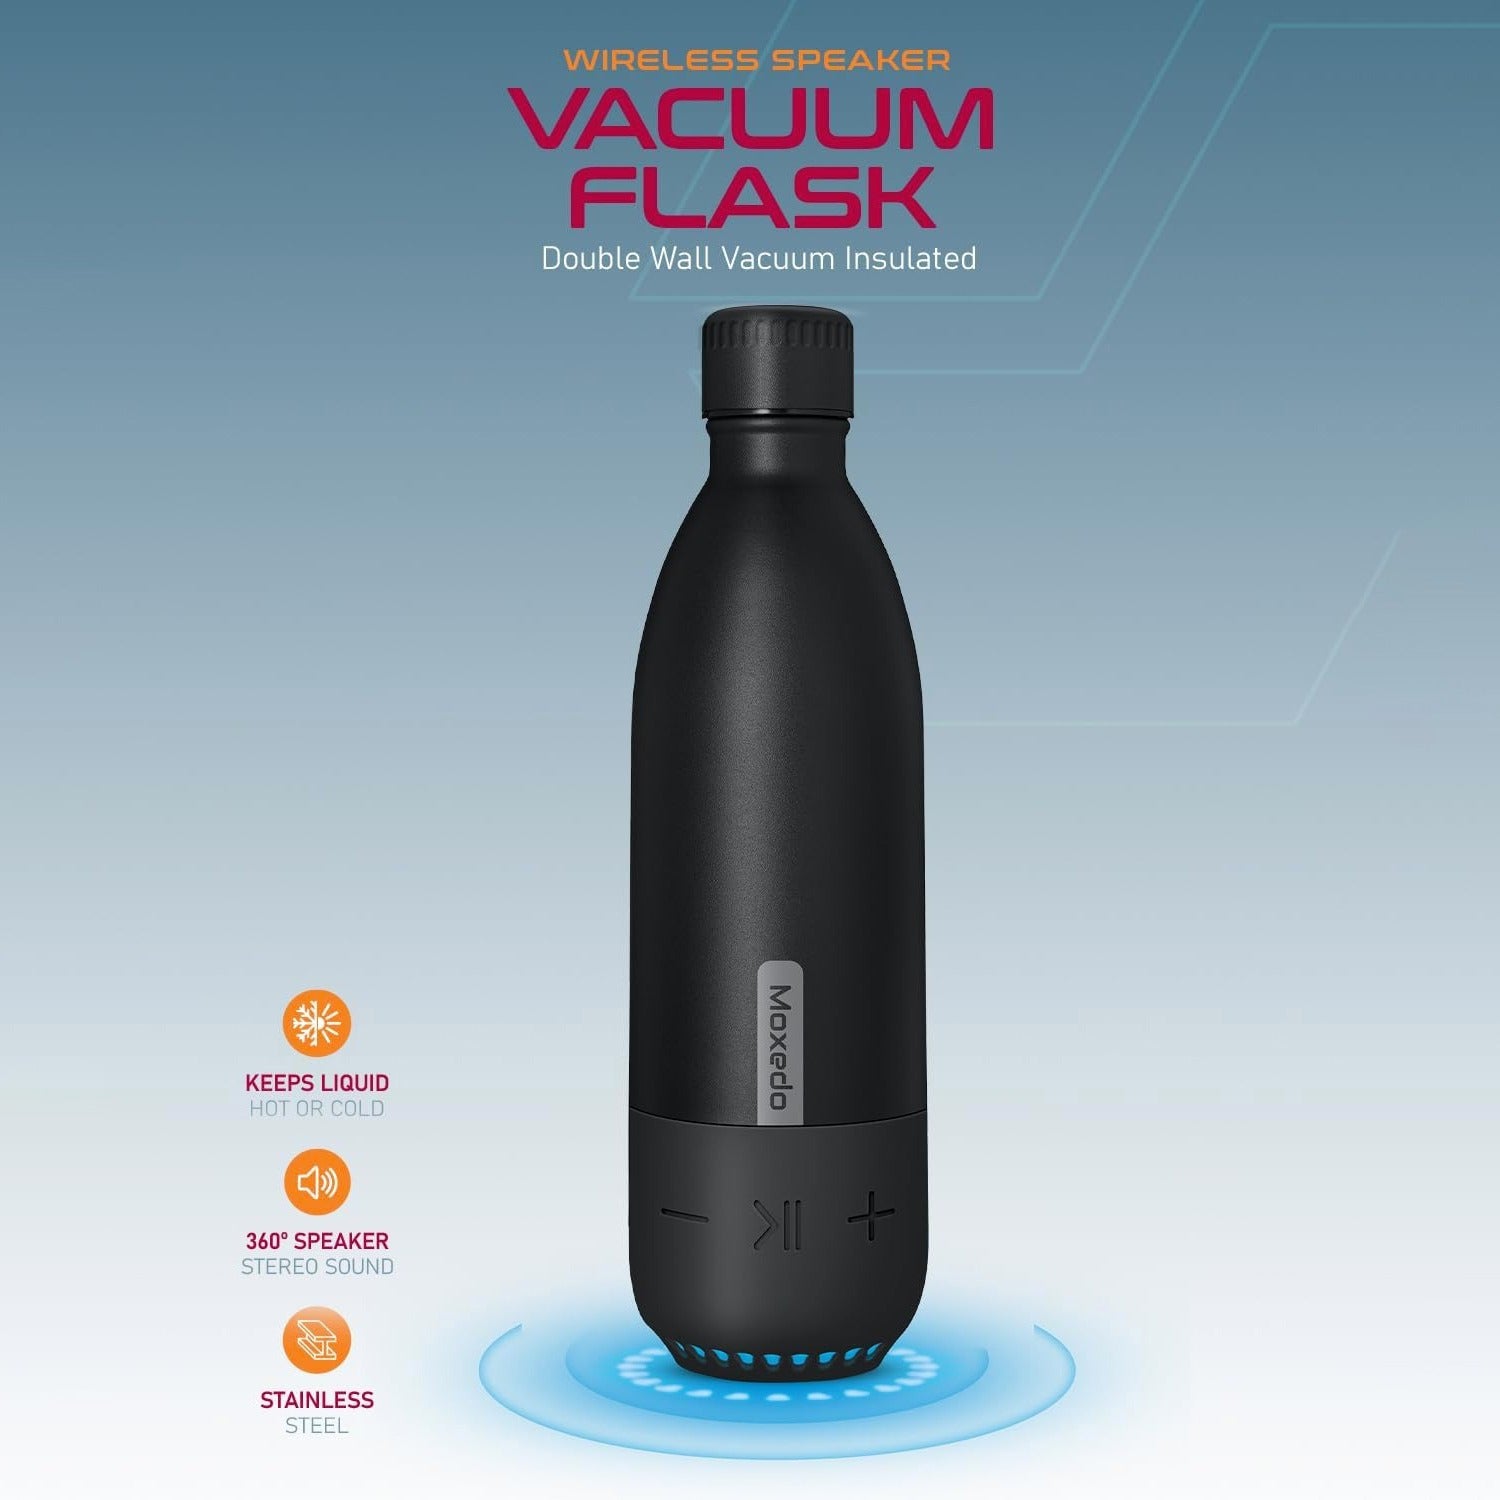 Moxedo Wireless Speaker Vaccum Flask